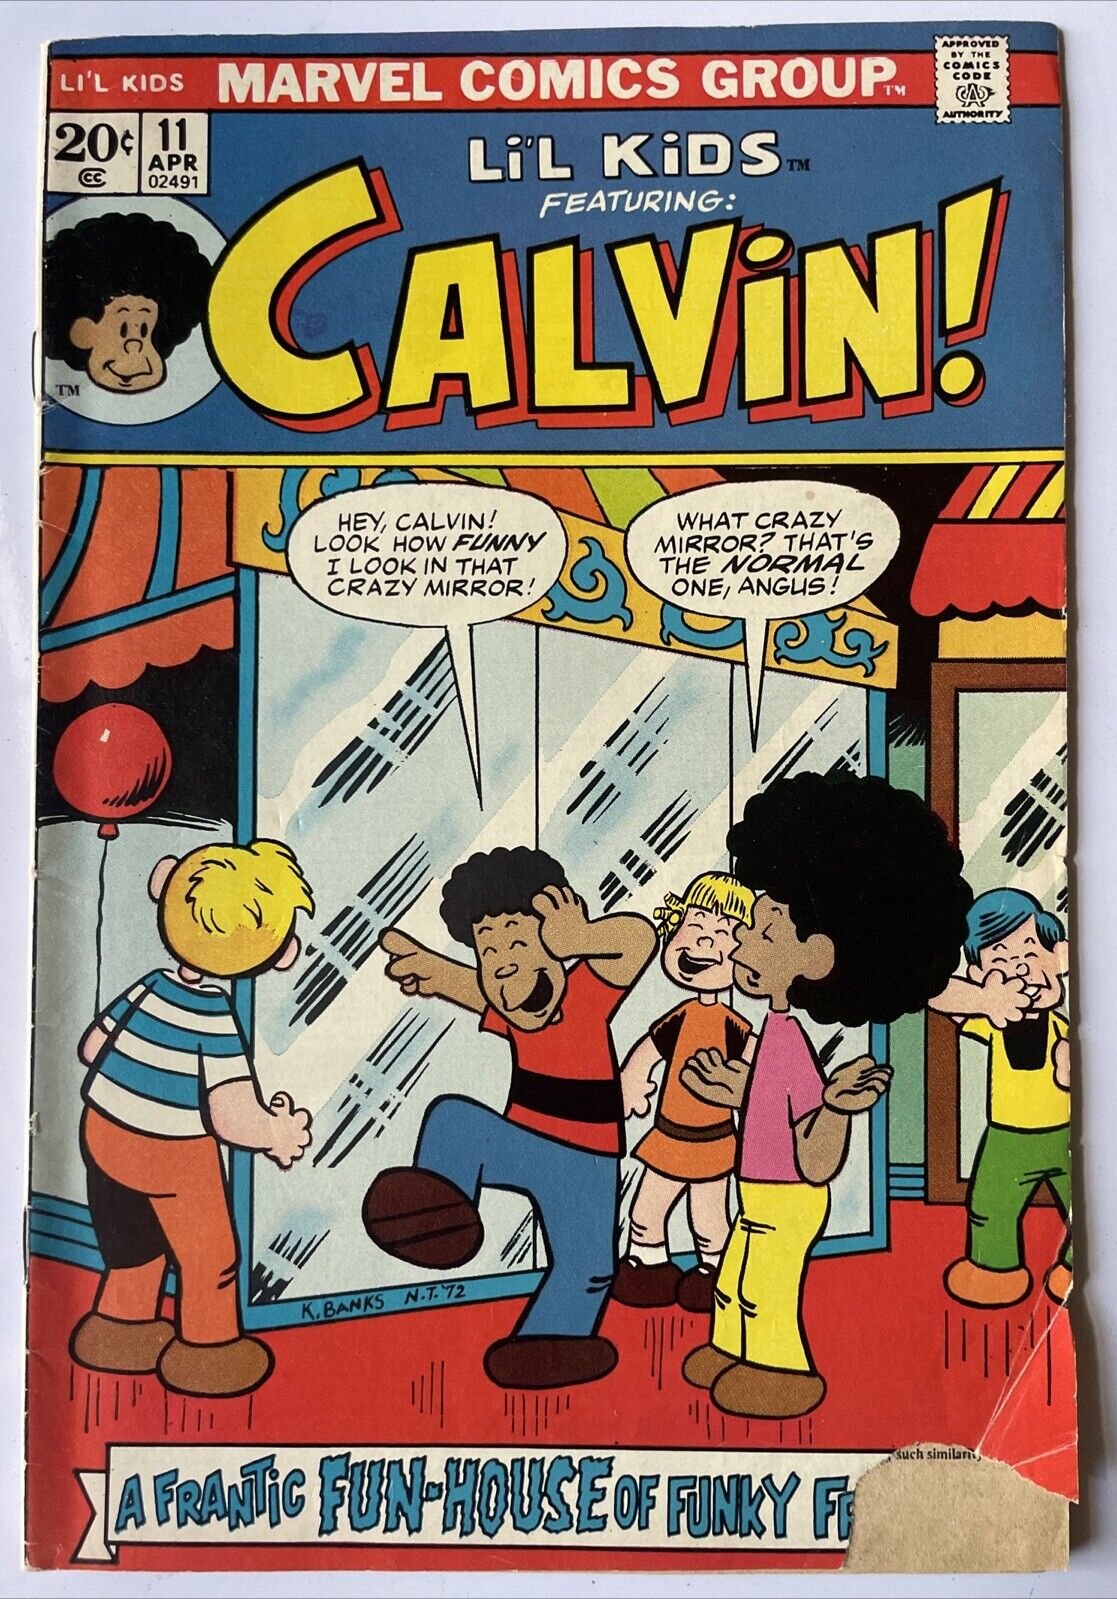 Li\'l Kids #11 Featuring Calvin • KEY 2nd Appearance of Calvin (Marvel 1973)